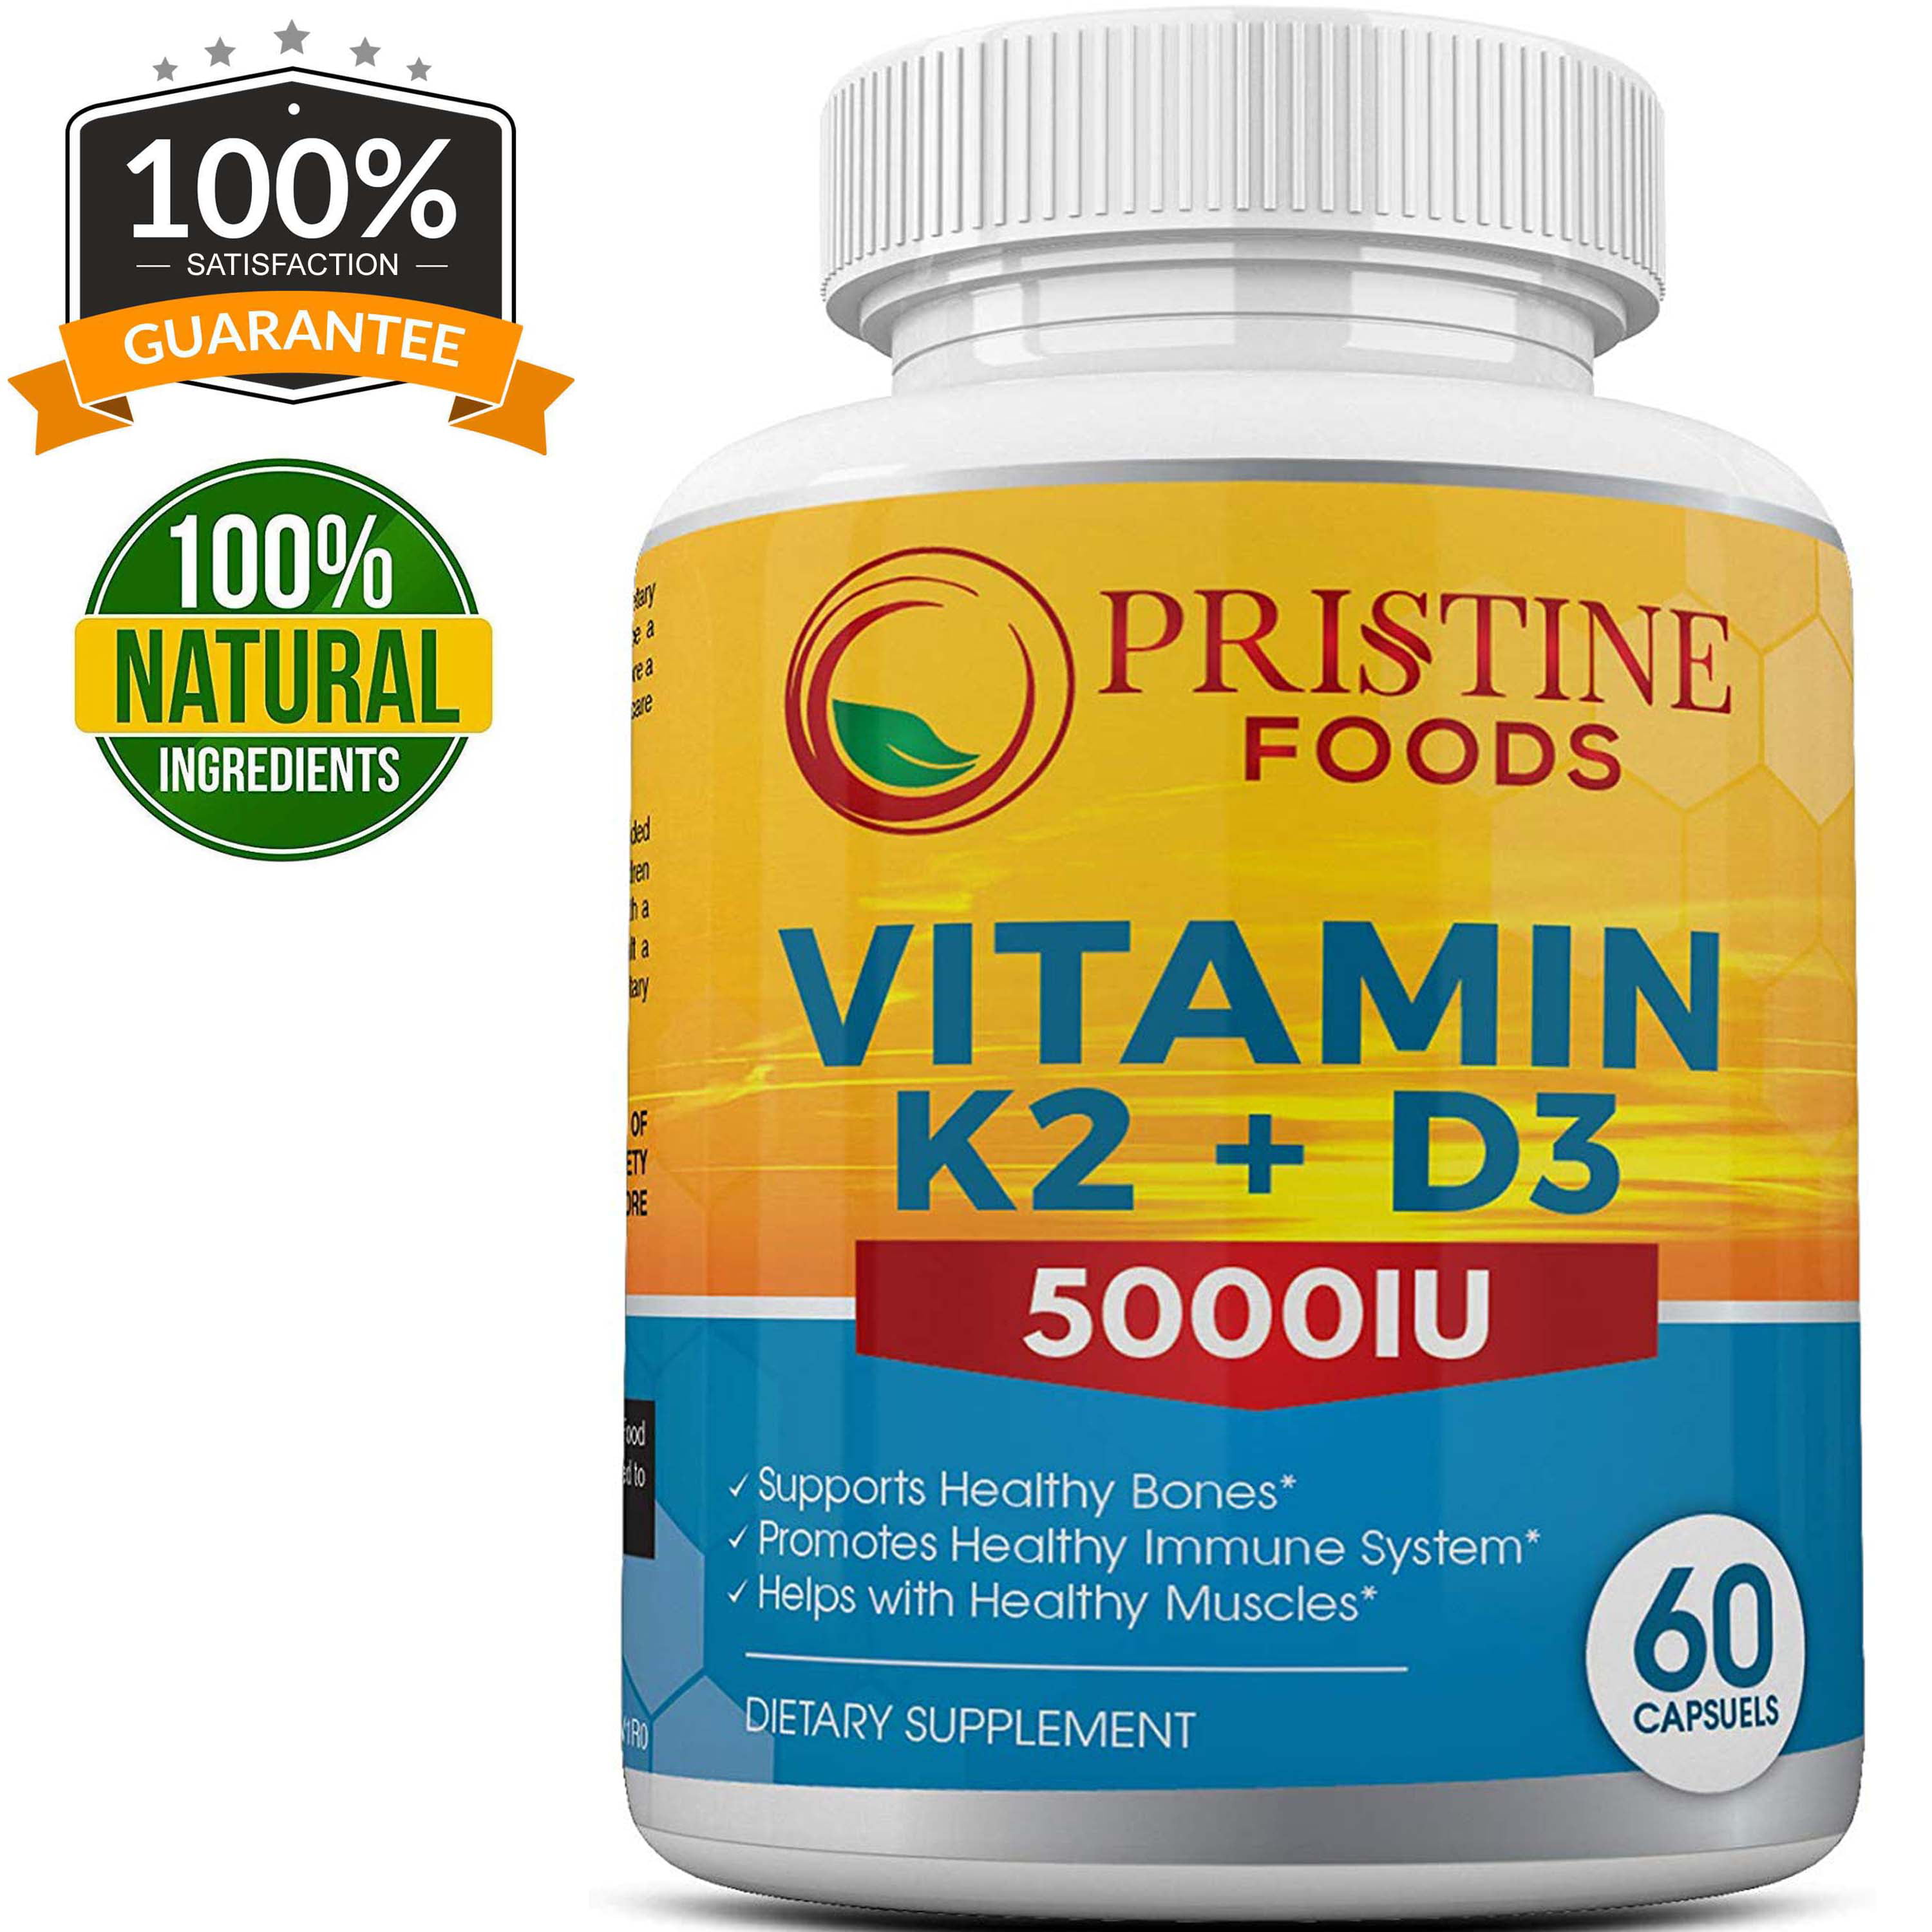 d3 vitamin 5000